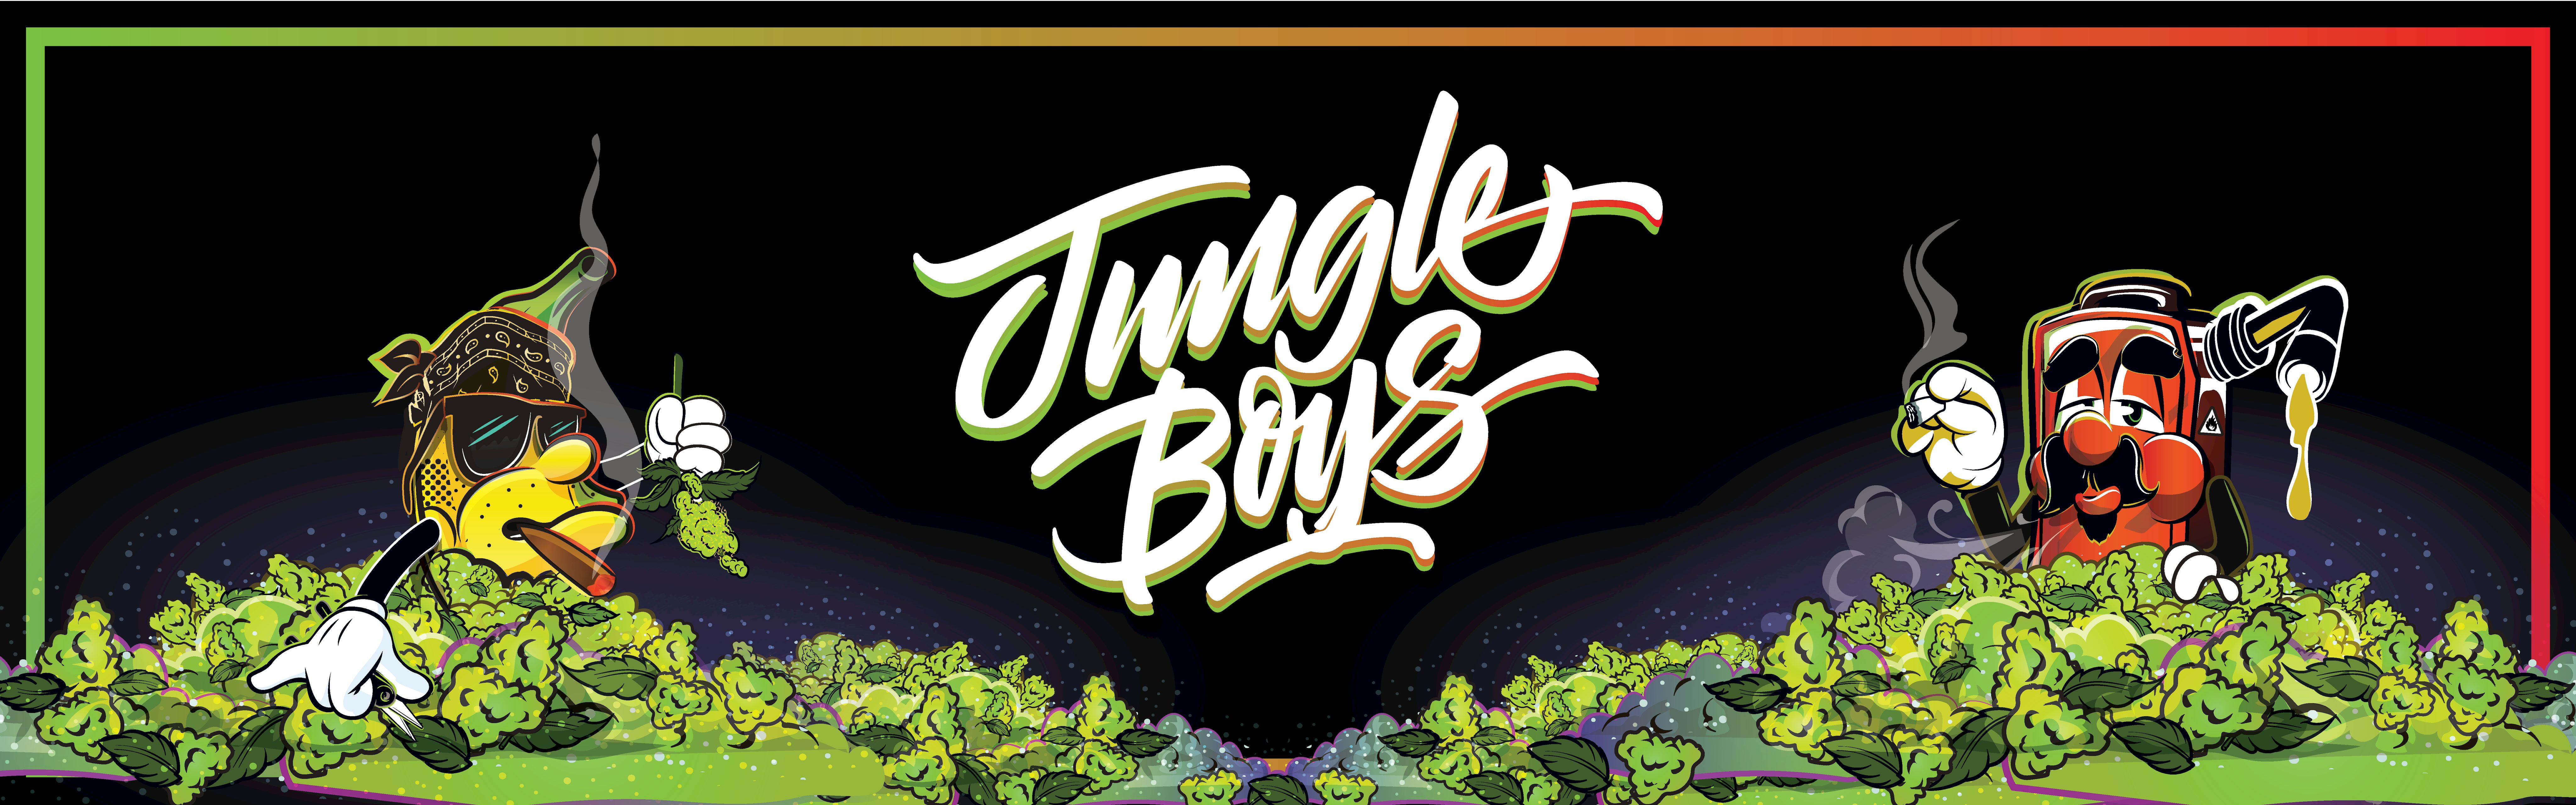 Jungle Boys banner